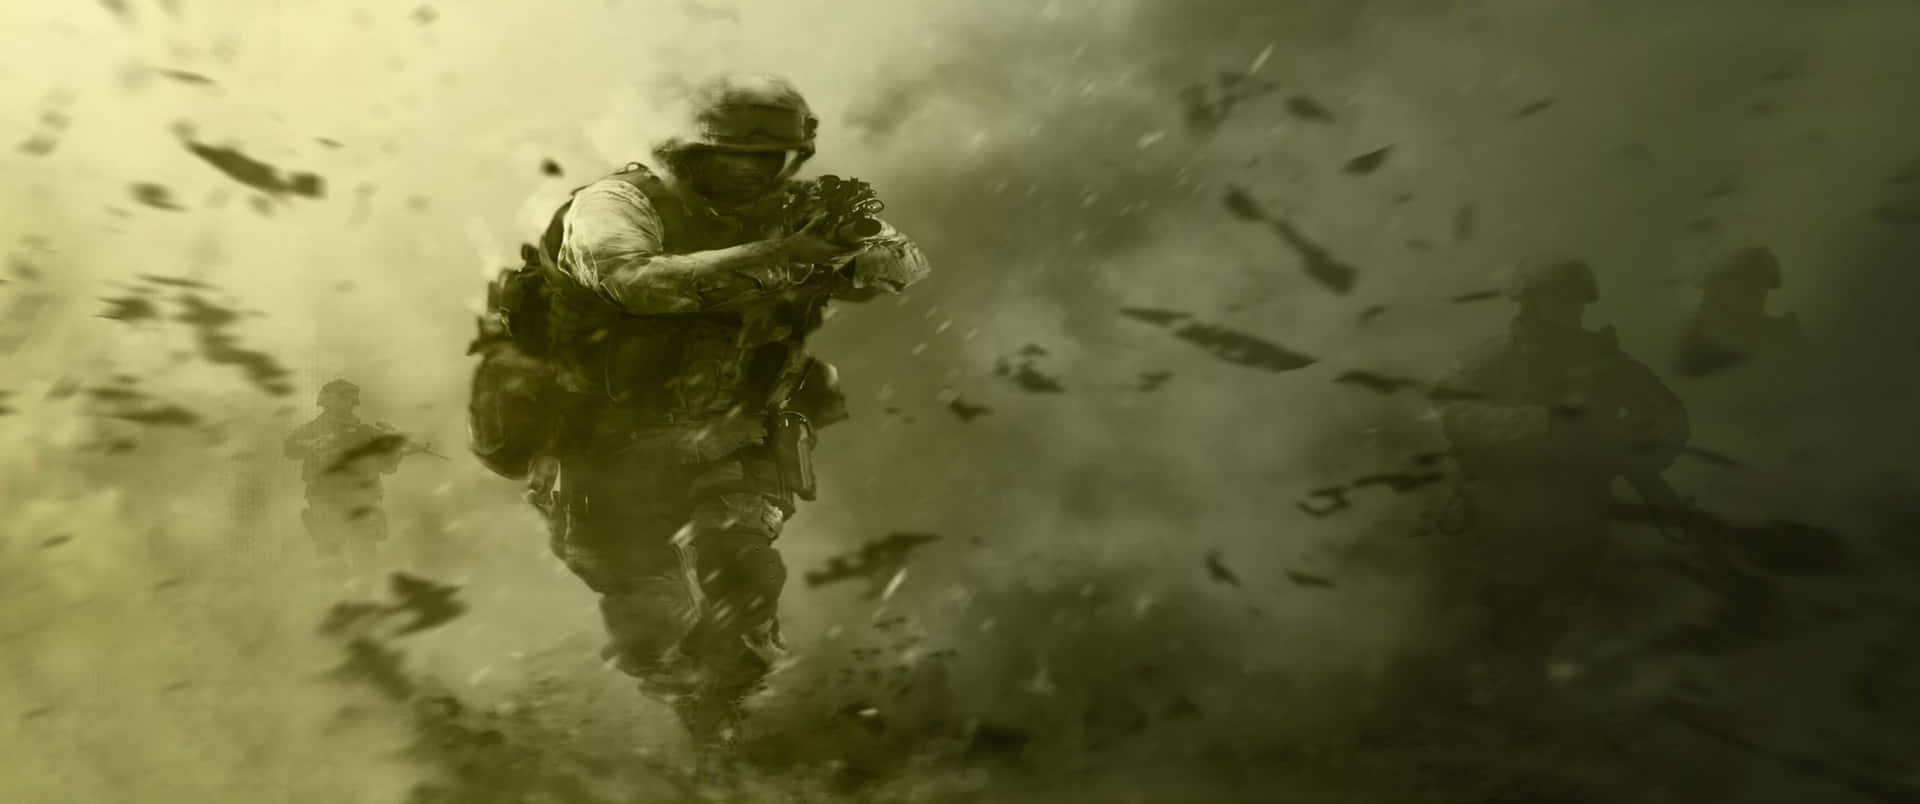 Flyrfrån Explosion 3440x1440p Call Of Duty Modern Warfare Bakgrund.